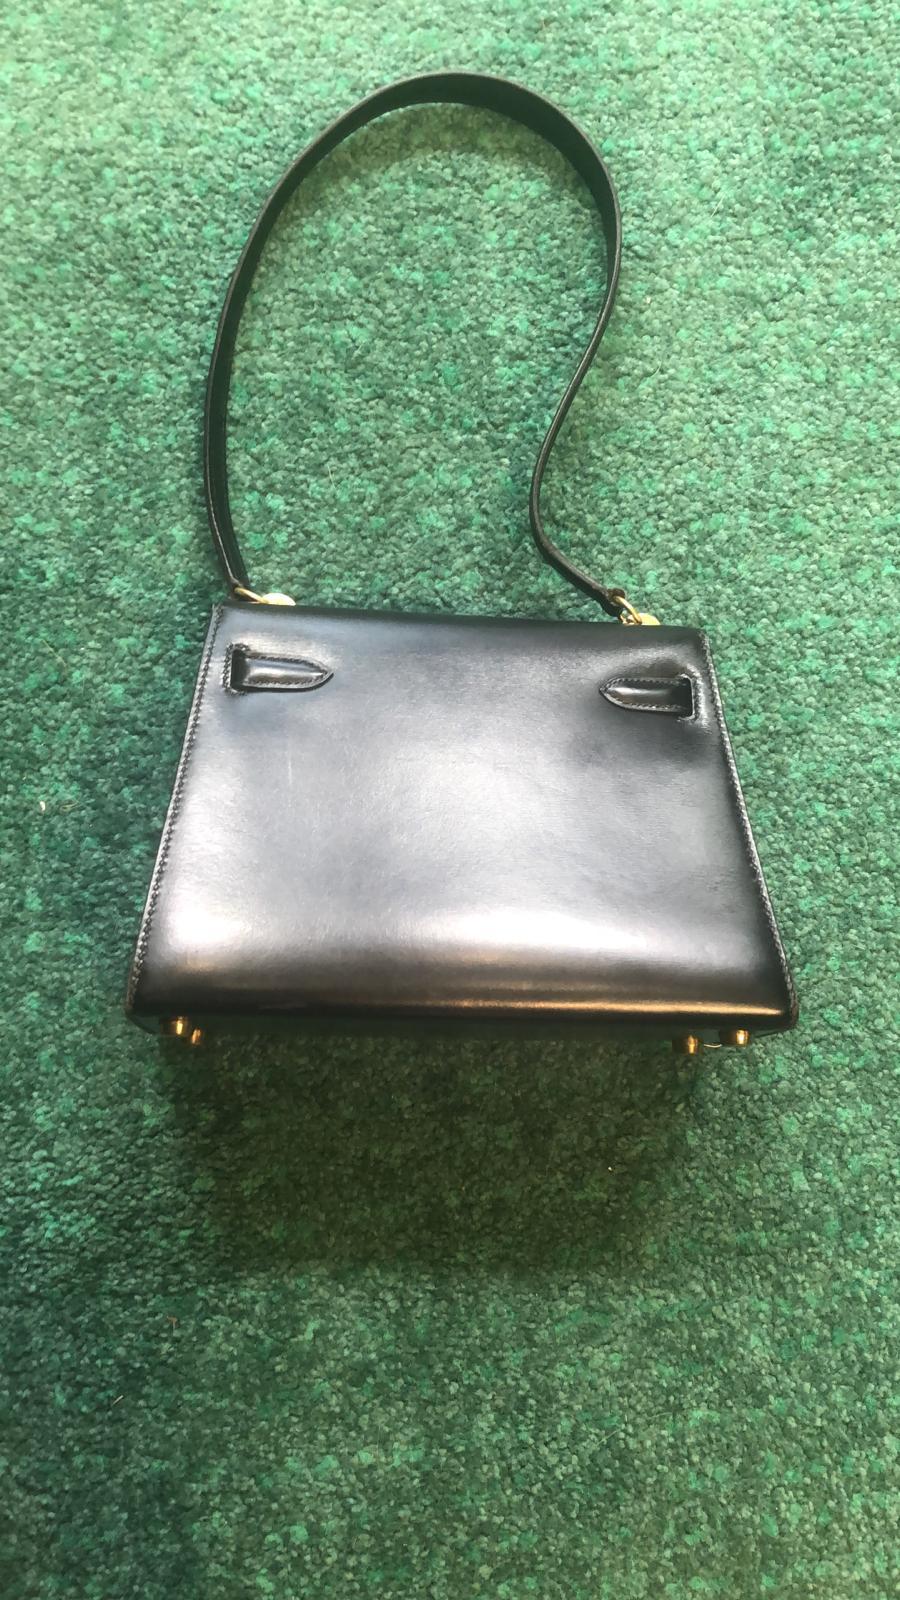 1988 Vintage Hermes Mini Kelly 20 Handbag in Black box leather 1